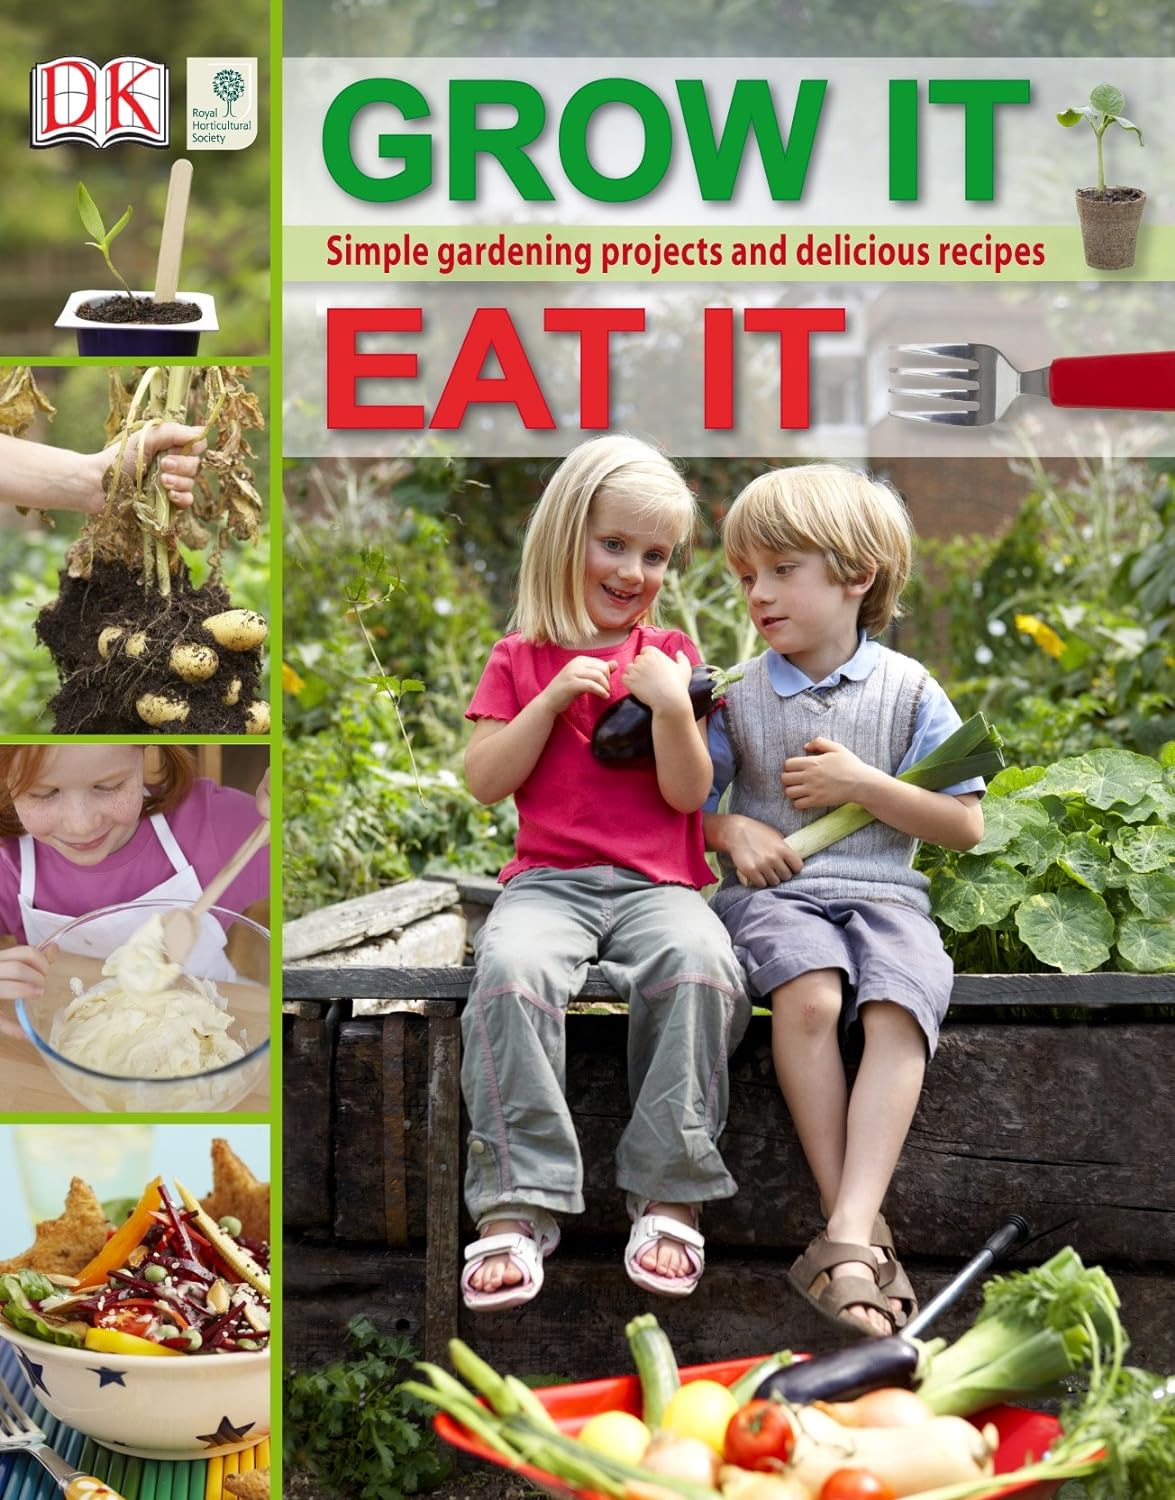 DK Publishing RHS Grow It, Eat It Hardcover Recipe Book RRP 9.99 CLEARANCE XL 4.99